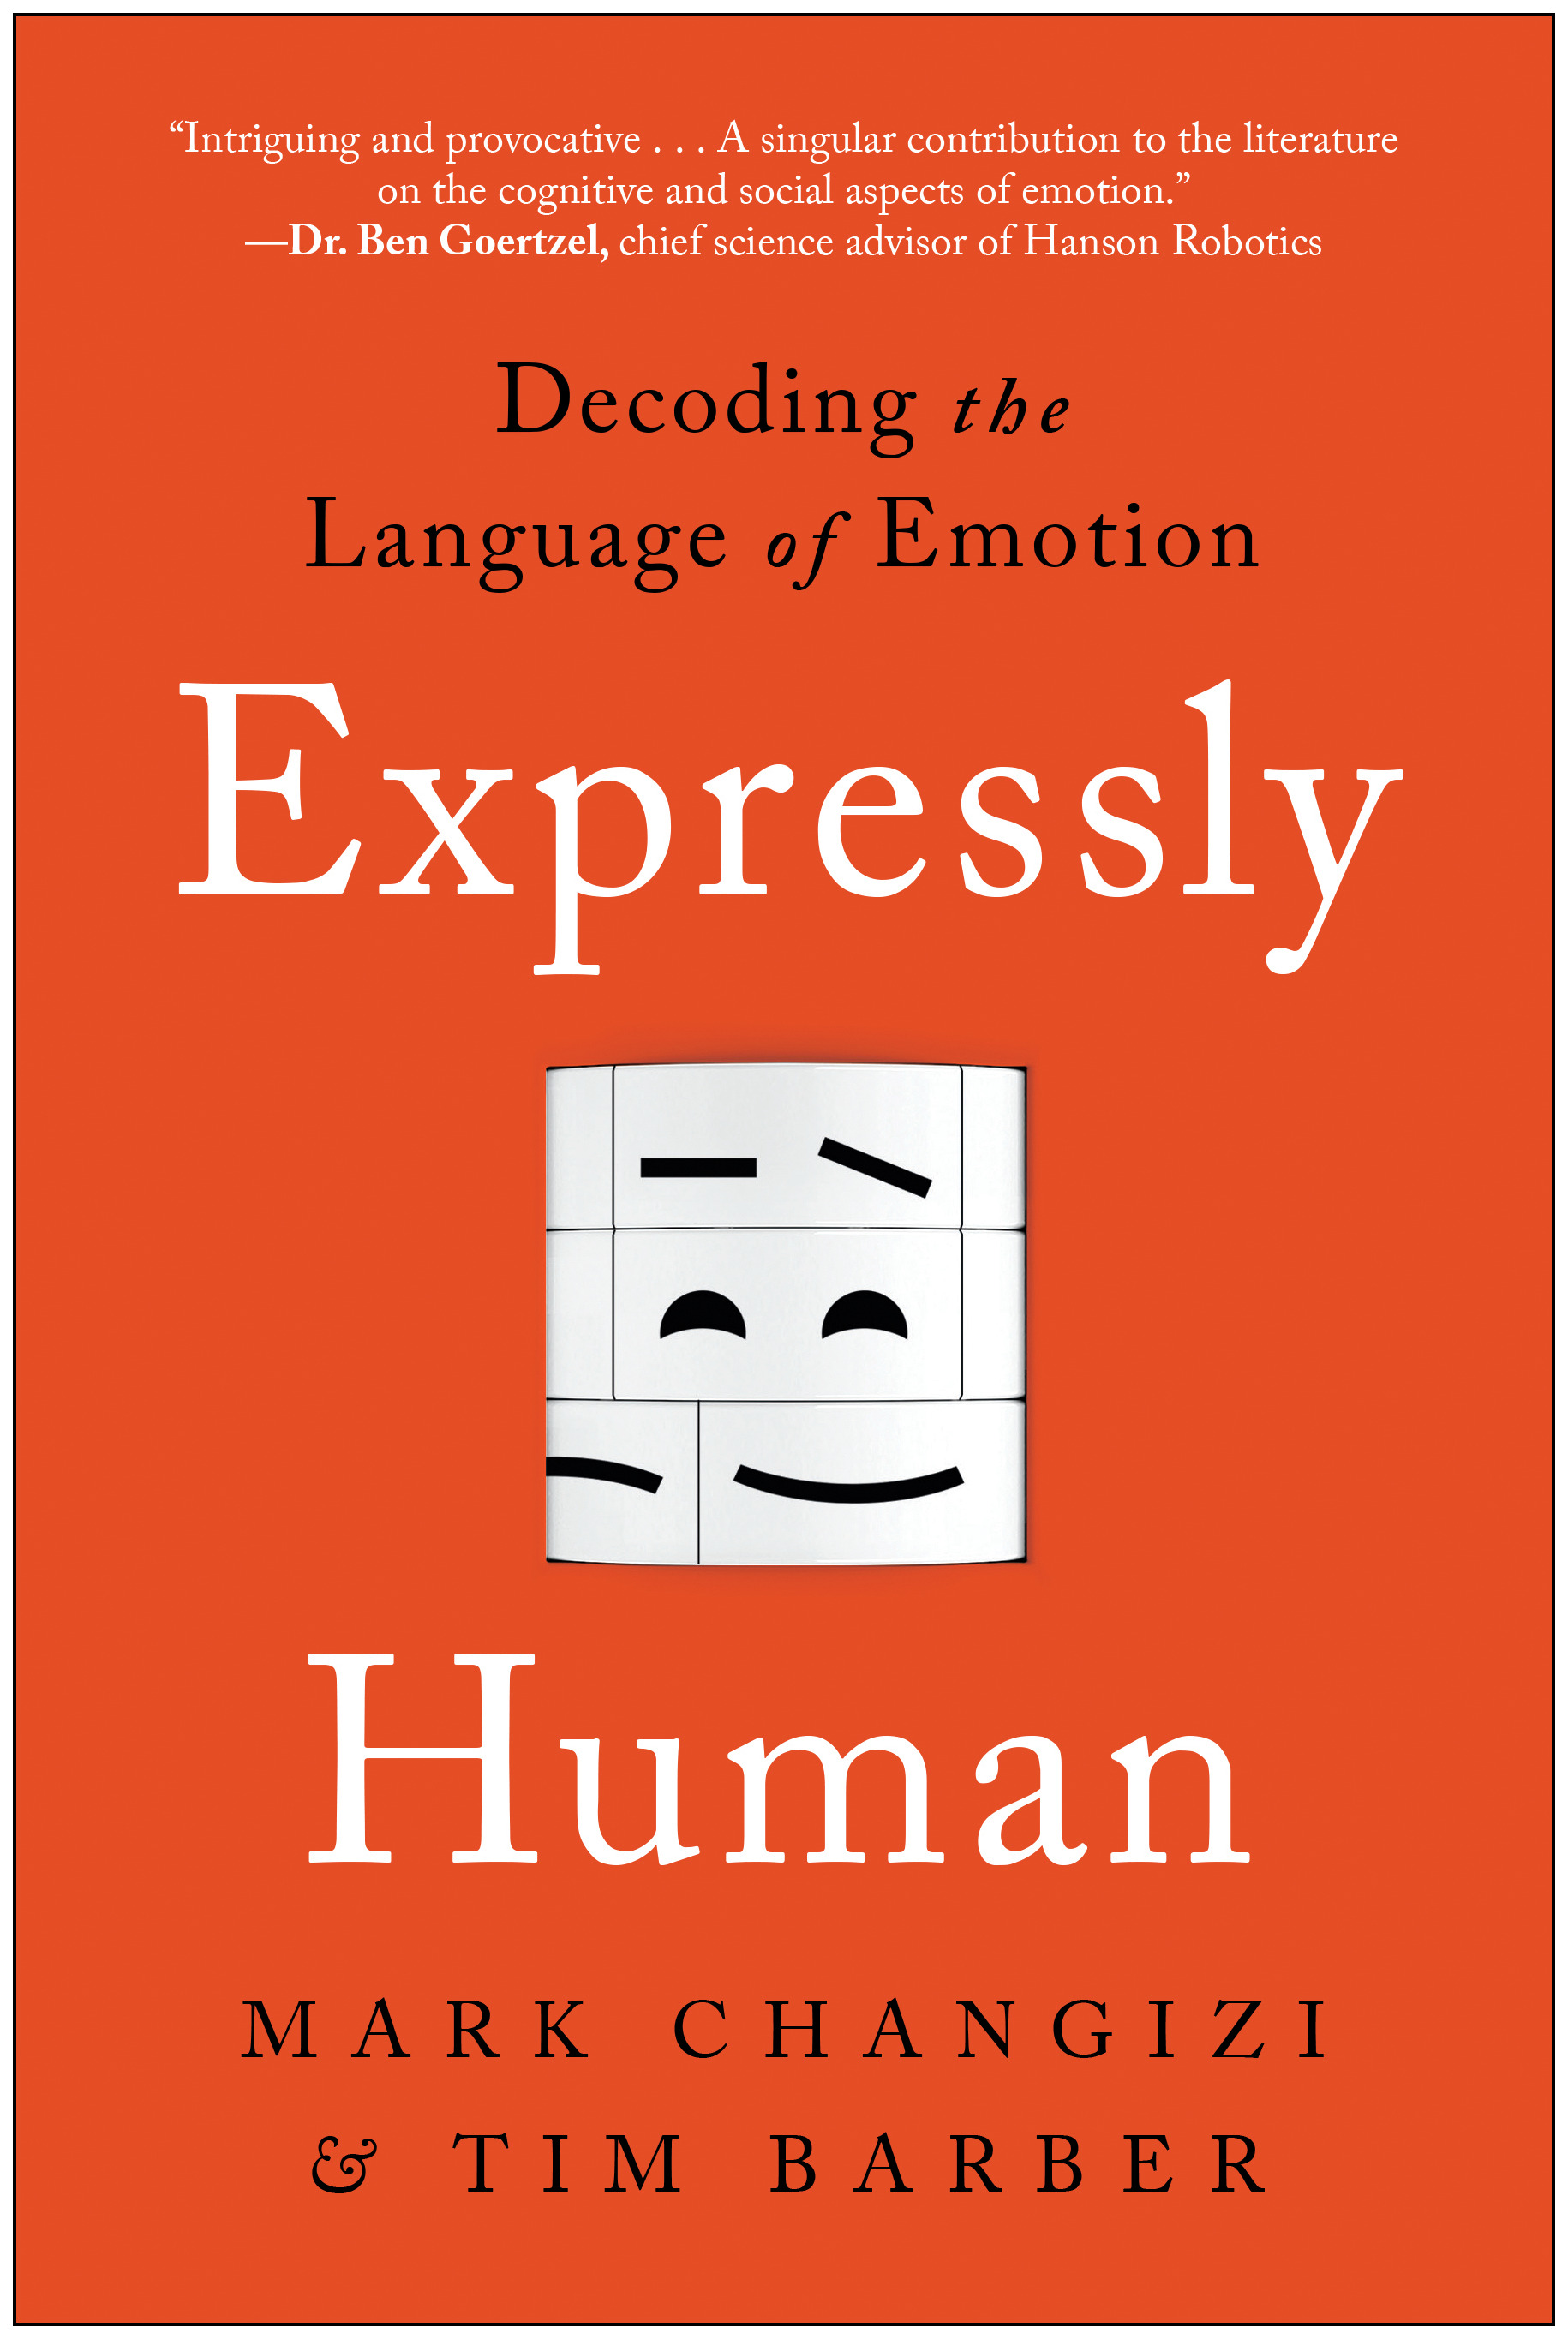 Expressly Human : Decoding the Language of Emotion | Psychology & Self-Improvement